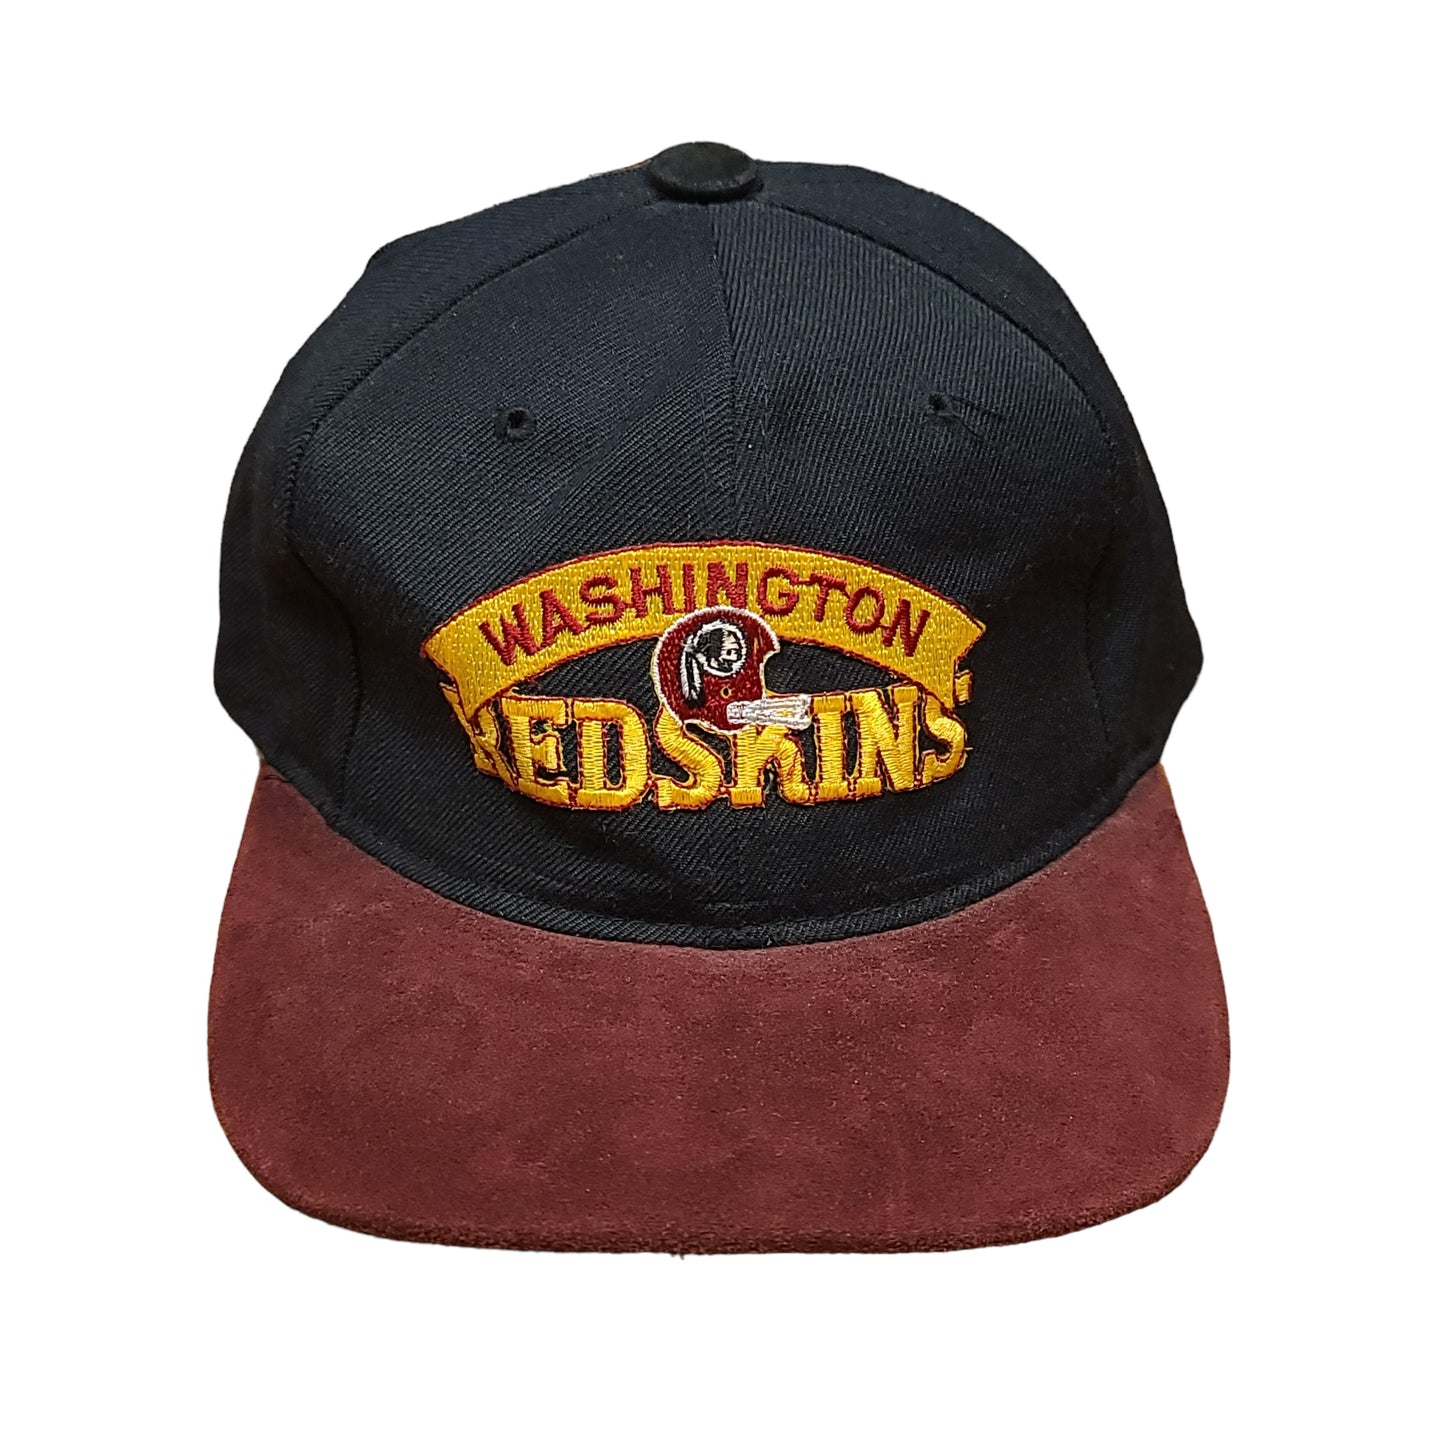 Vintage Washington Commanders Wool Blend Snap Back Hat